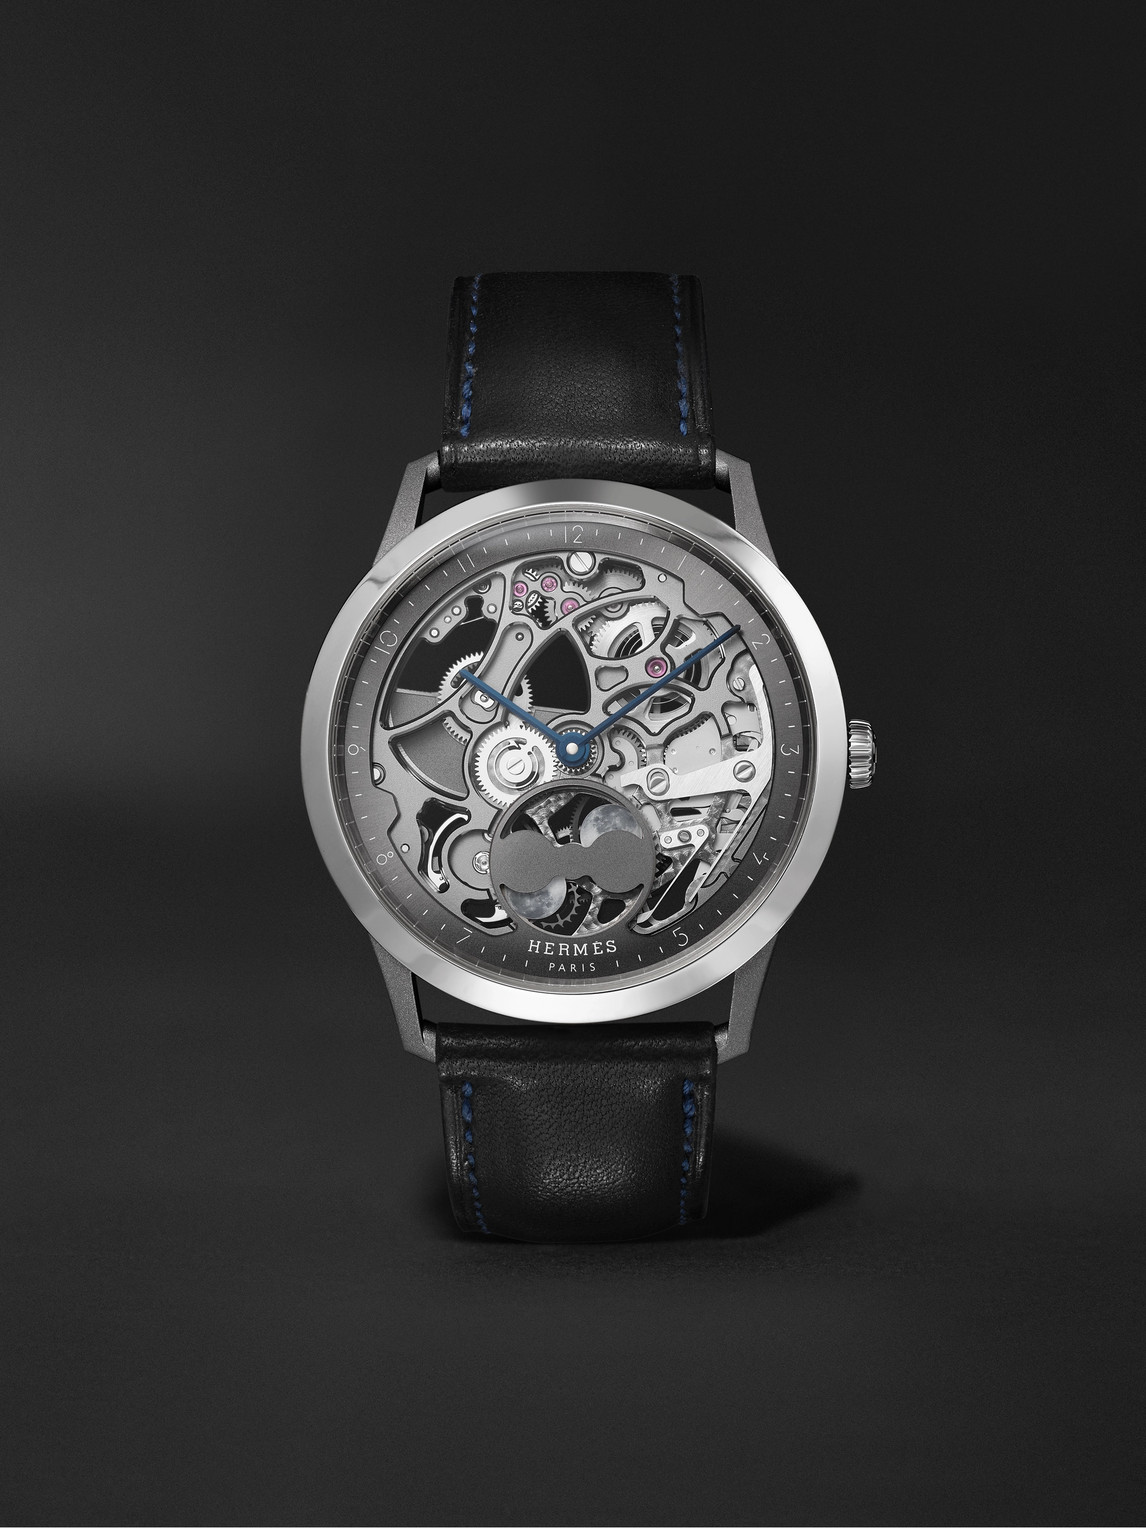 Hermès Timepieces Slim D'hermès Squelette Lune 39.5mm Automatic Titanium And Leather Watch, Ref. No. 054695ww00 In Black